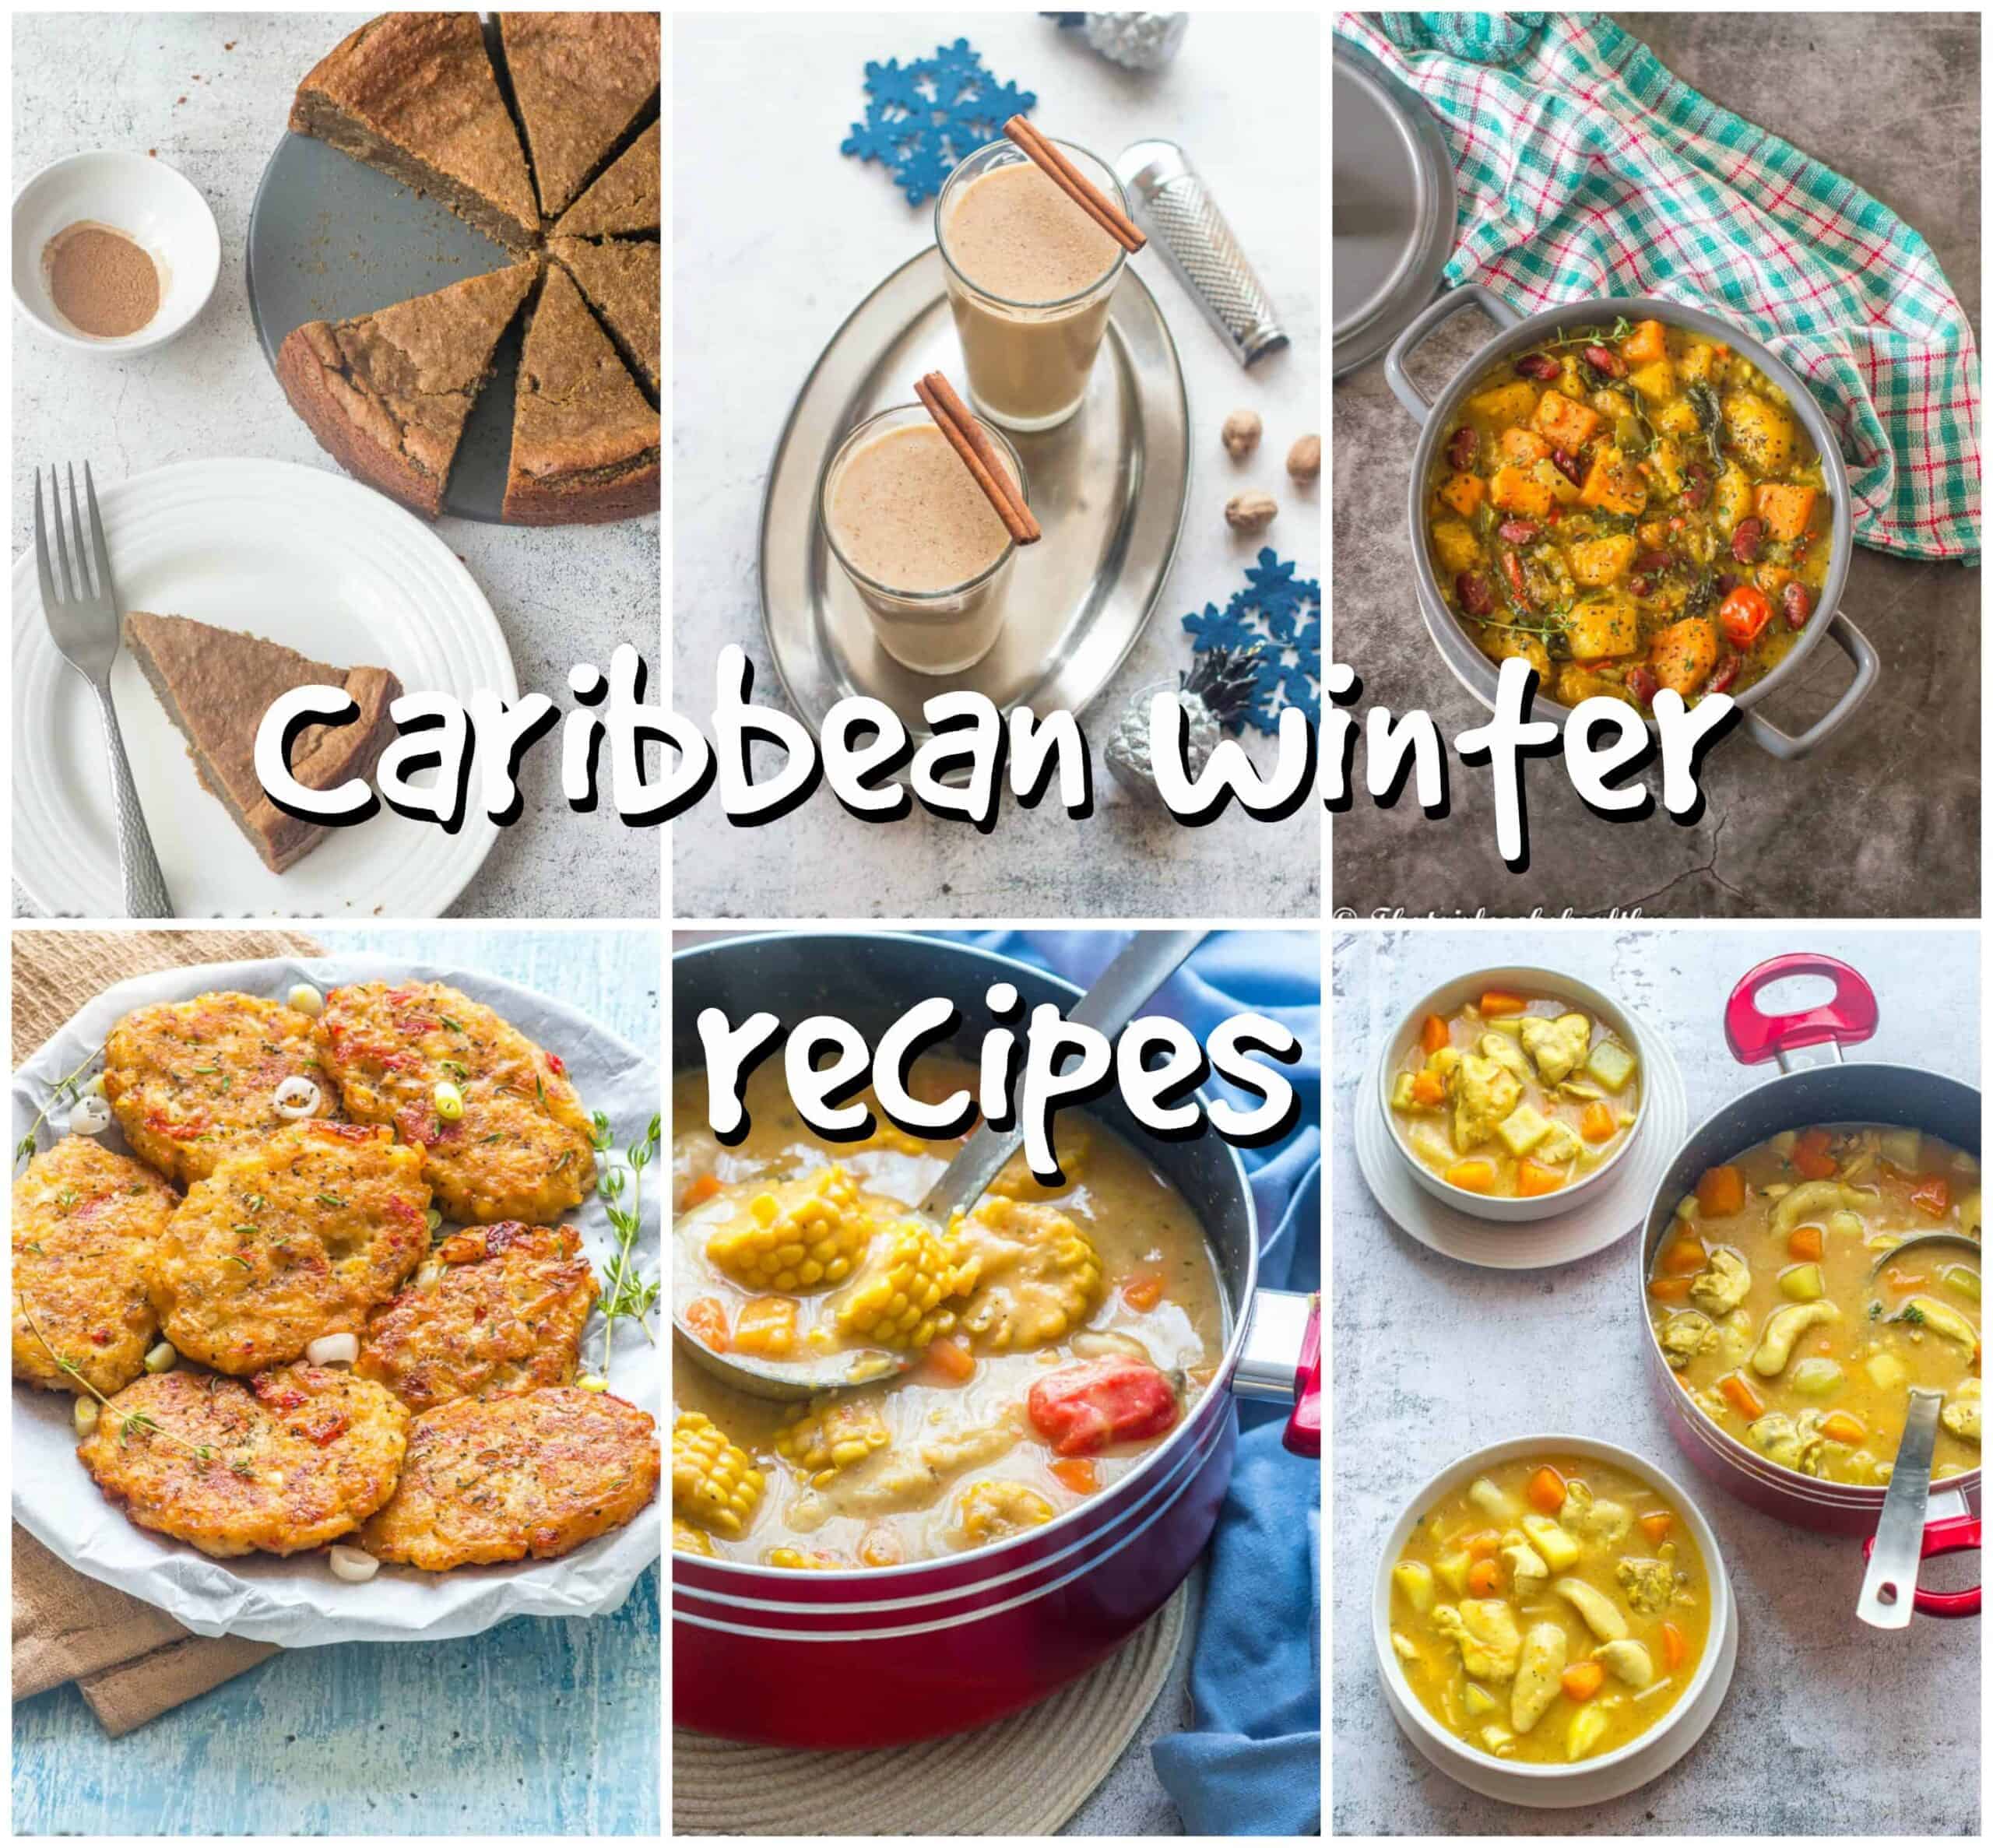 Caribbean winter recipes